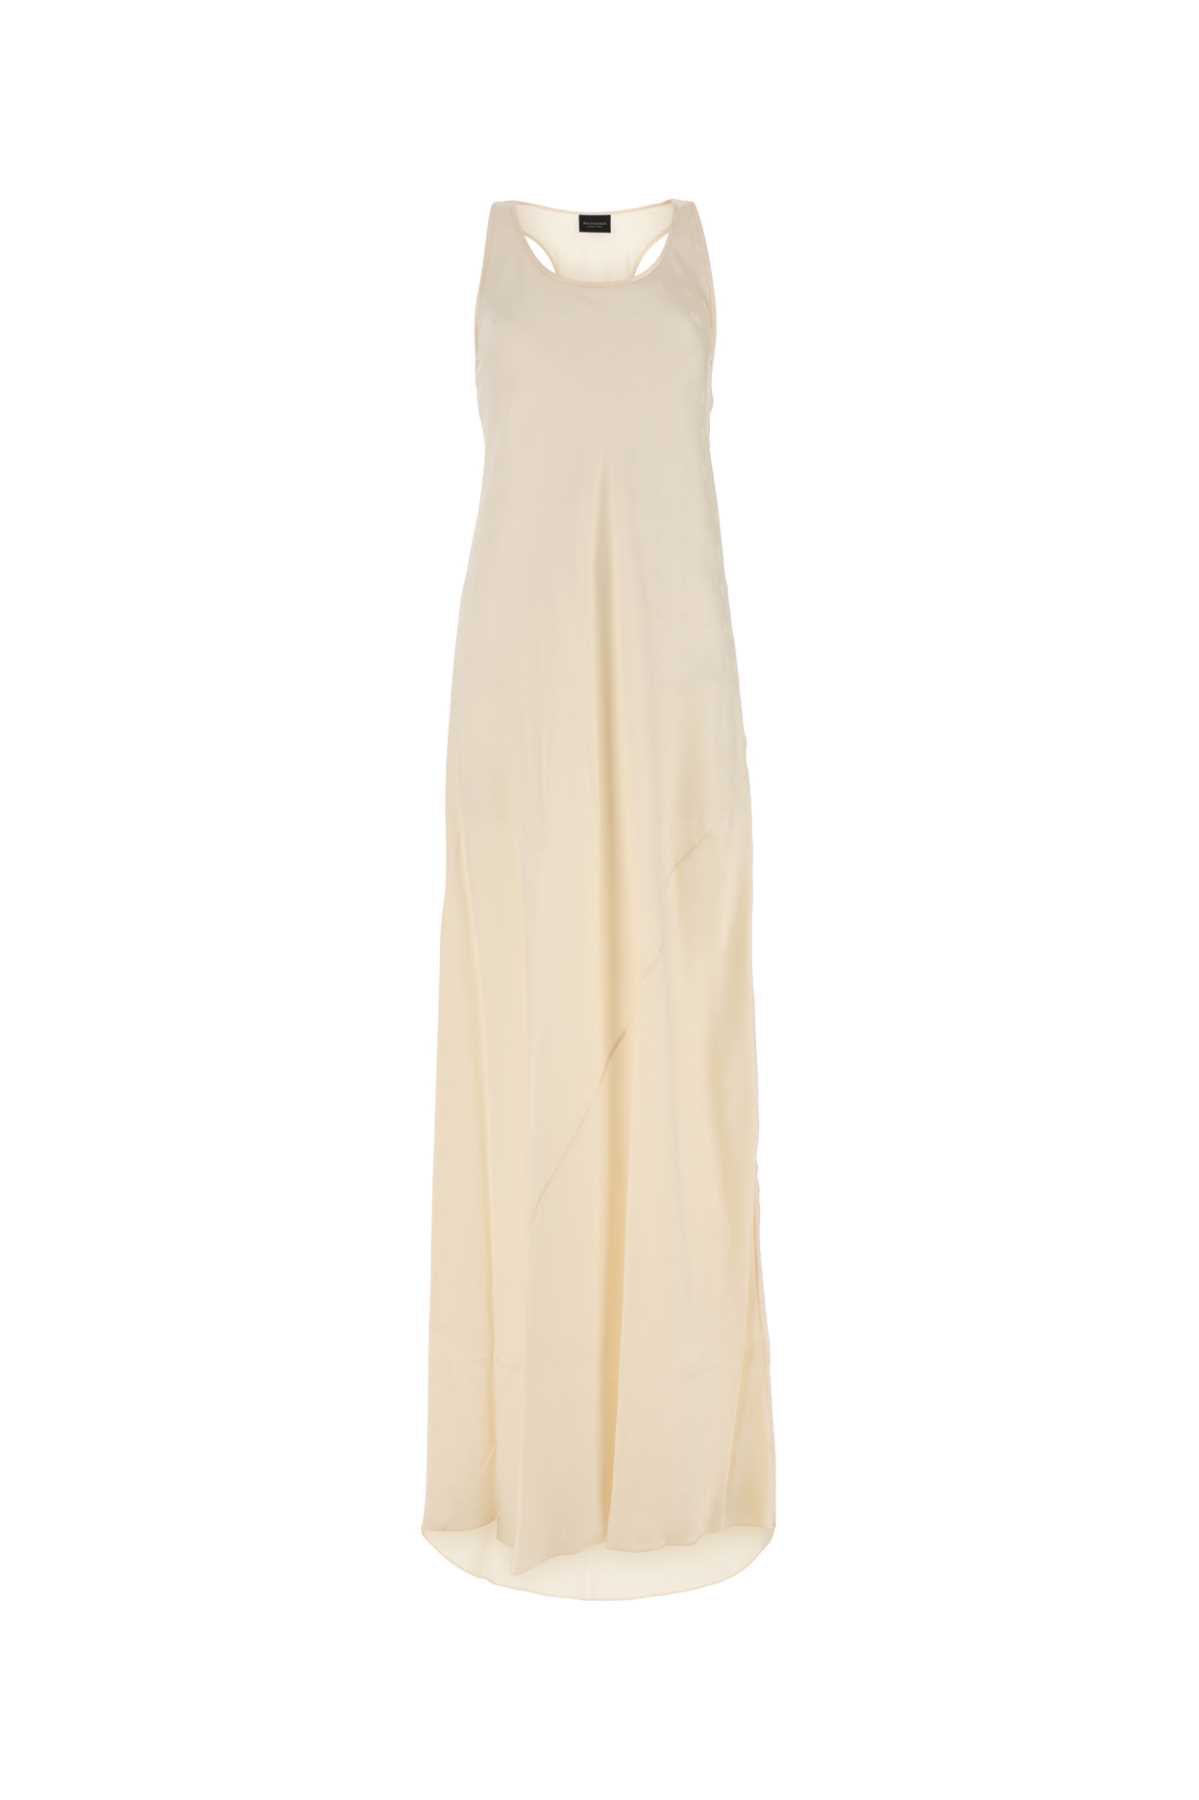 Balenciaga Ivory Satin Long Dress